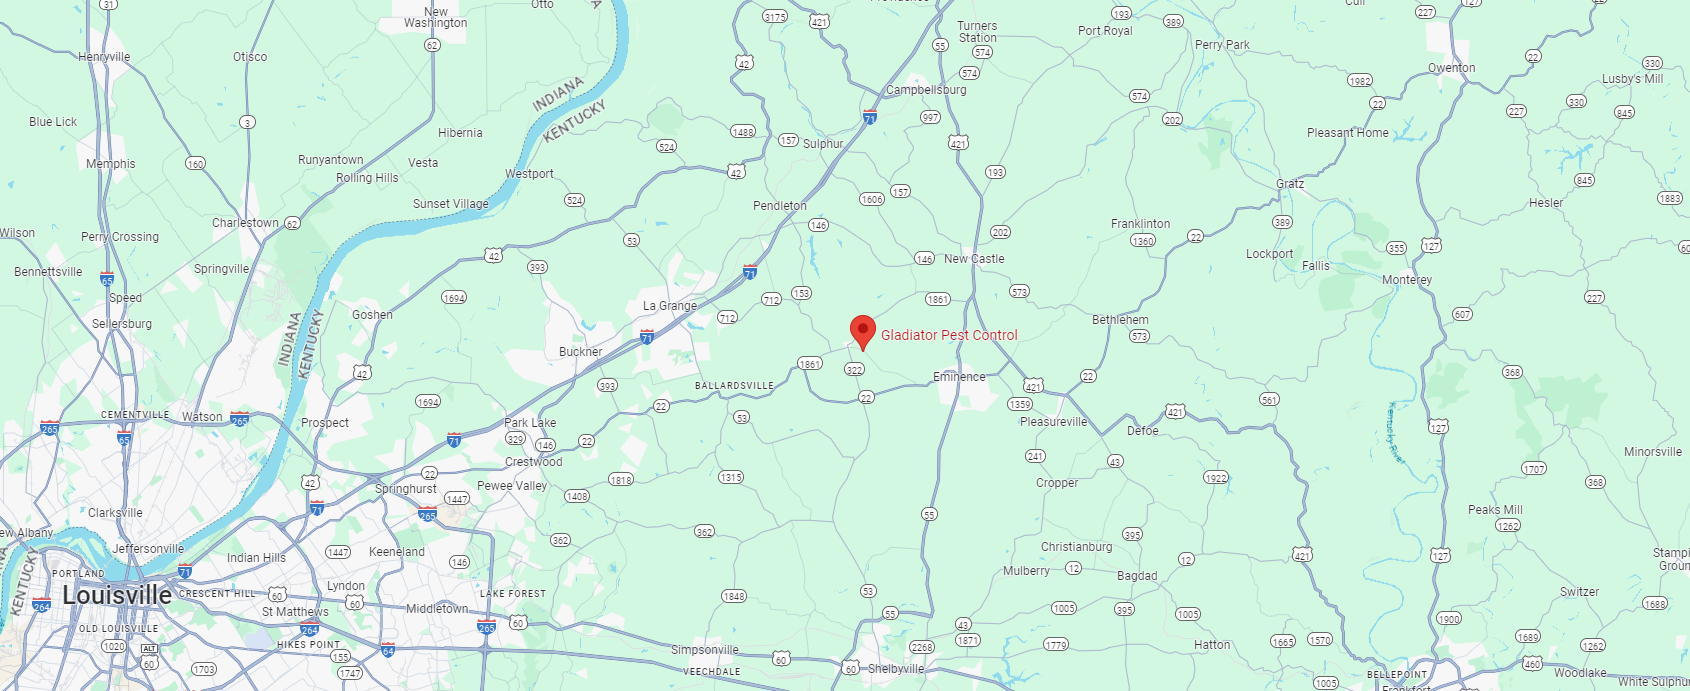 Google Maps placeholder image